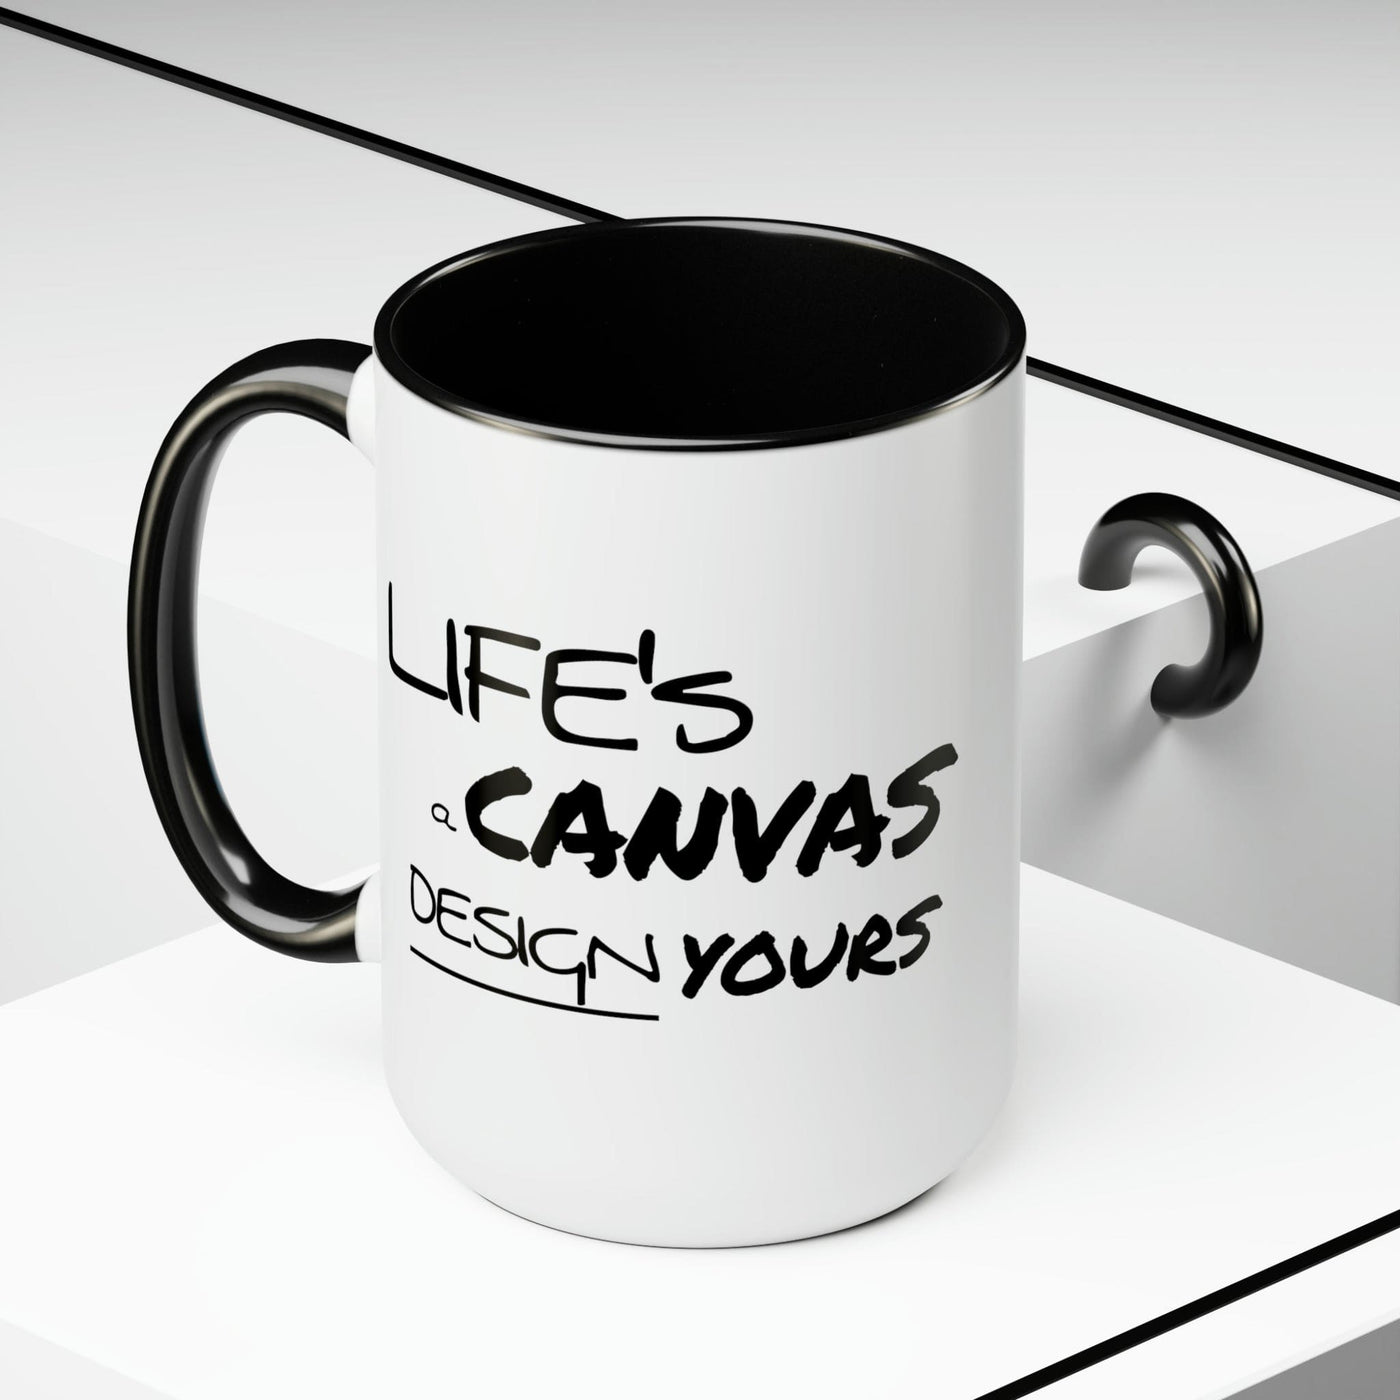 Accent Ceramic Coffee Mug 15oz - Life’s a Canvas Design Yours Motivational